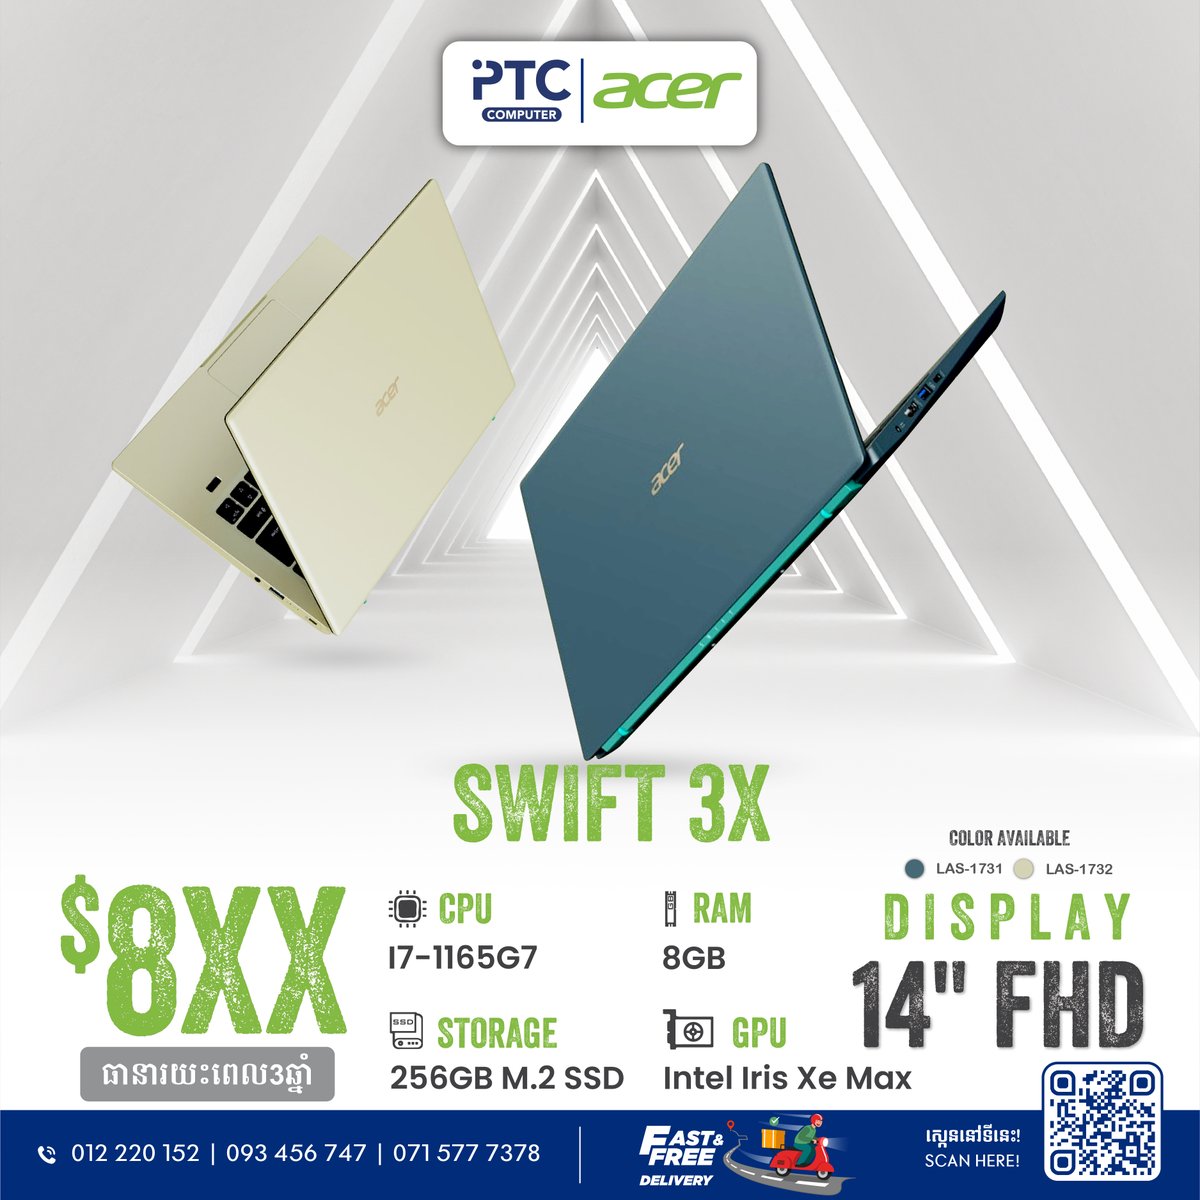 Acer Swift3 ជា Laptop ដែលអាចប្រើប្រាស់បានយ៉ាងរលូនជាមួយនឹងការងារការិយាល័យ 🤩😍
ចុចមើលព័ត៌មានបន្ថែមតាមរយៈ Link ខាងក្រោម ៖
- ptc-computer.com.kh/ptc-computer

#ptccomputer  #acer #acerswift #swift3